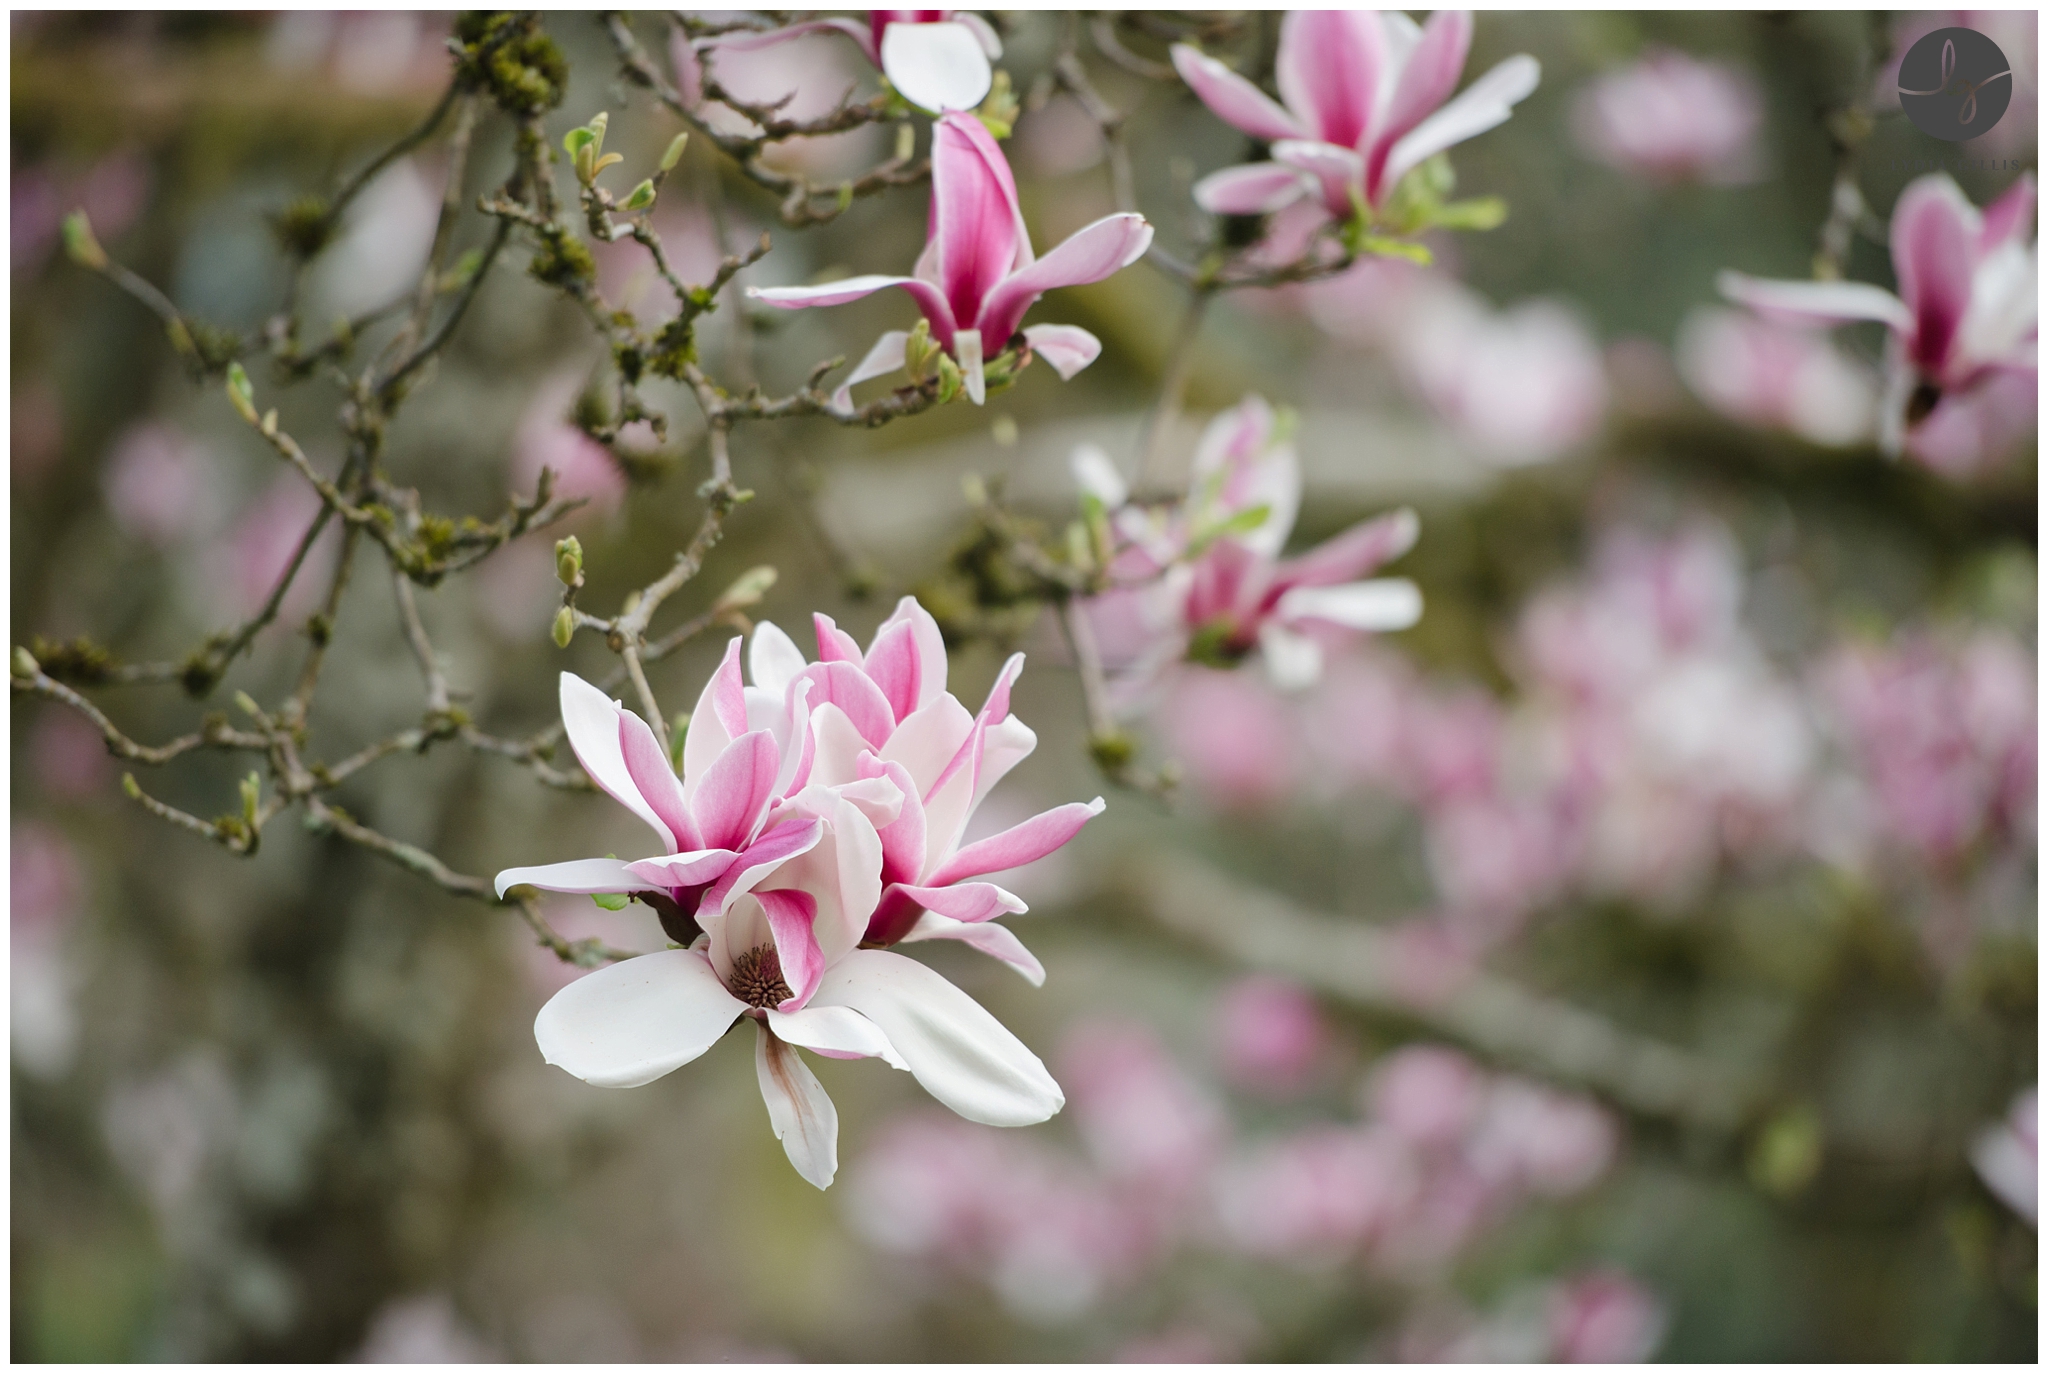 photos of magnolias at Hendricks Park